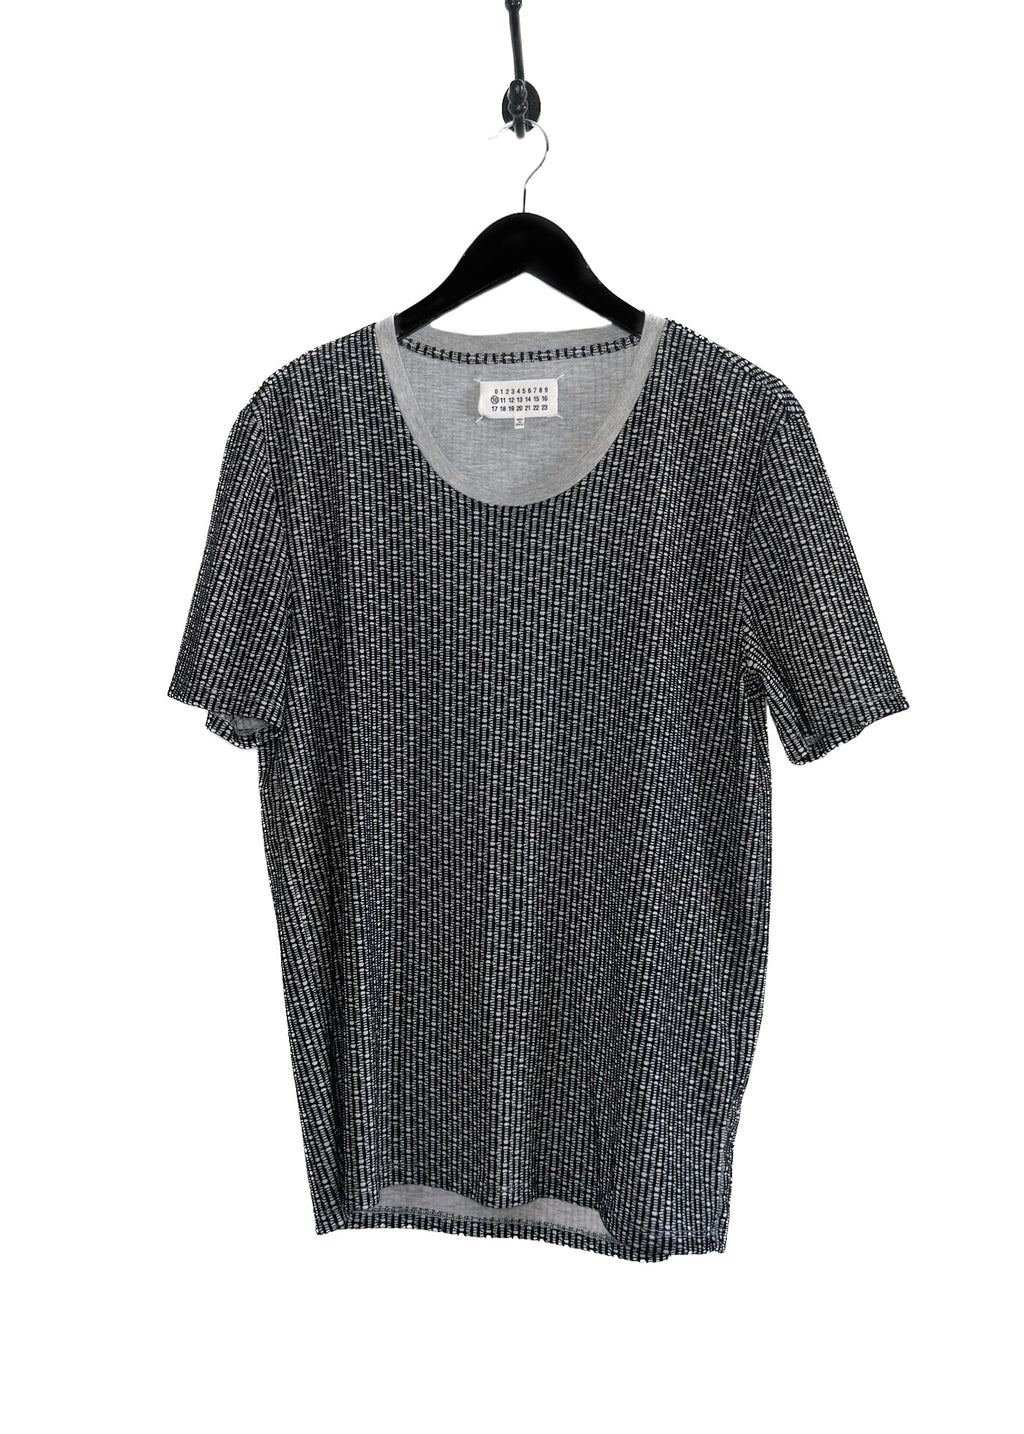 Maison Martin Margiela Grey and Black Lace Effect T-Shirt